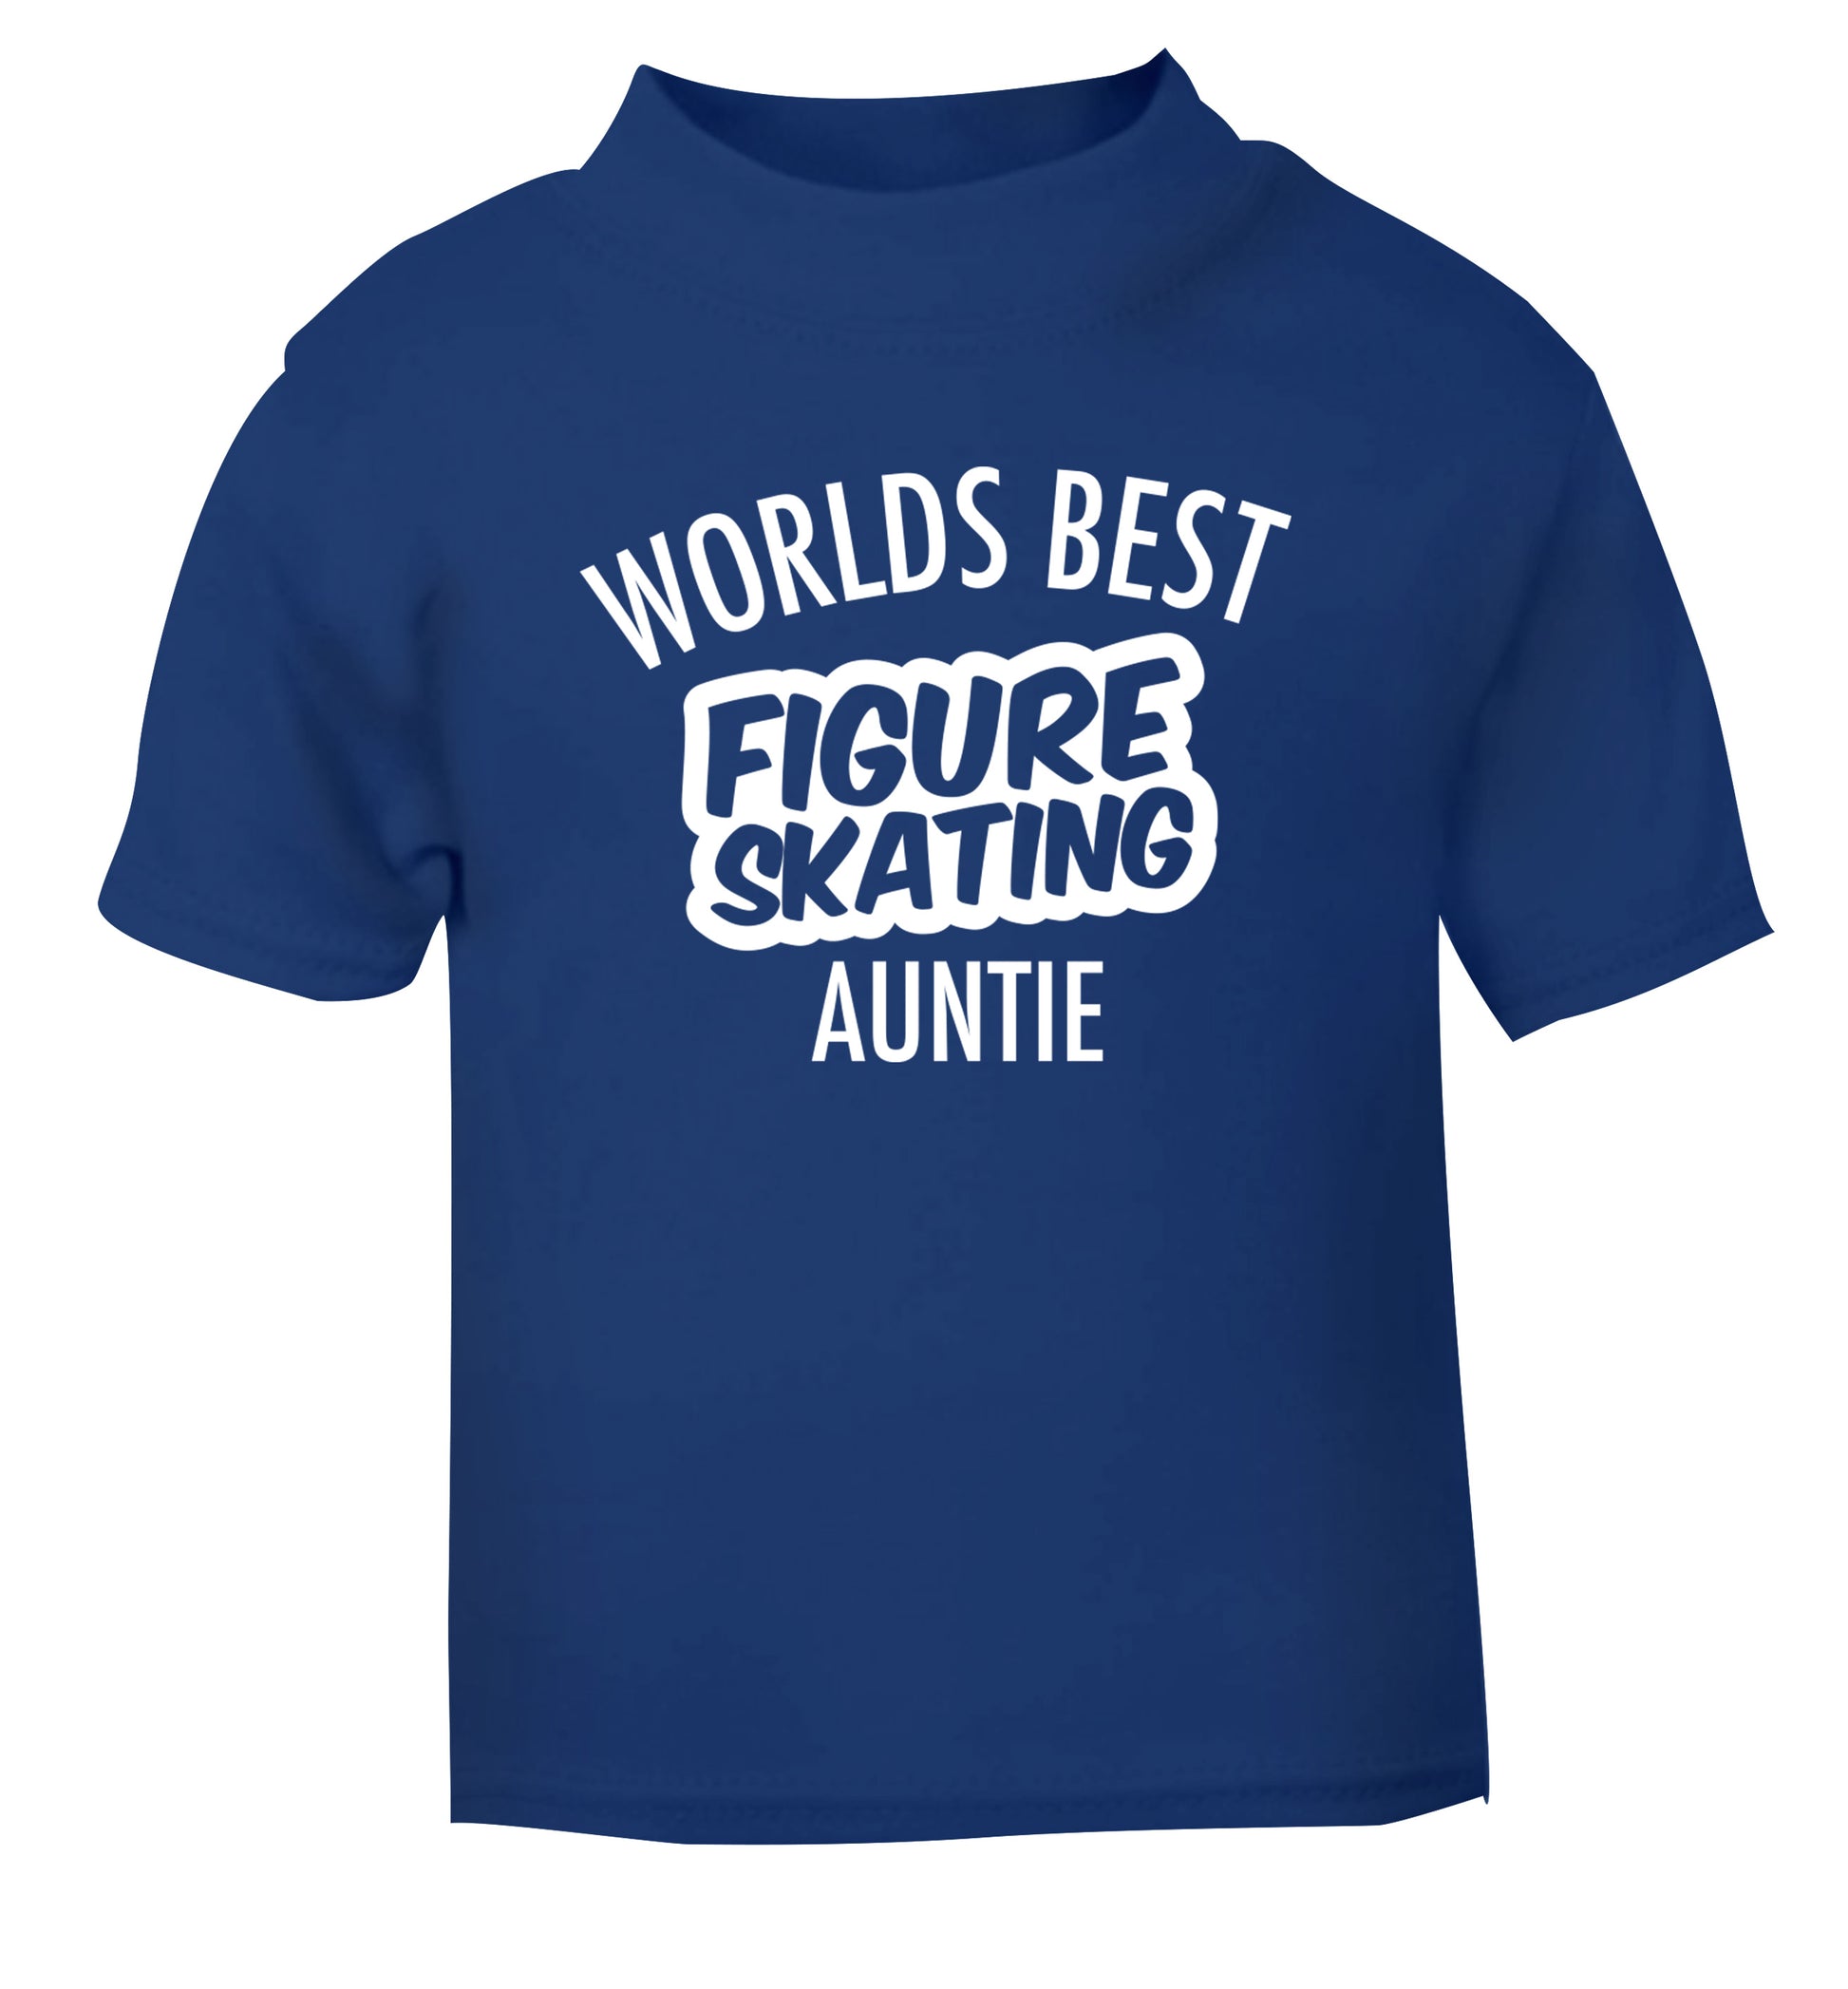 Worlds best figure skating auntie blue Baby Toddler Tshirt 2 Years